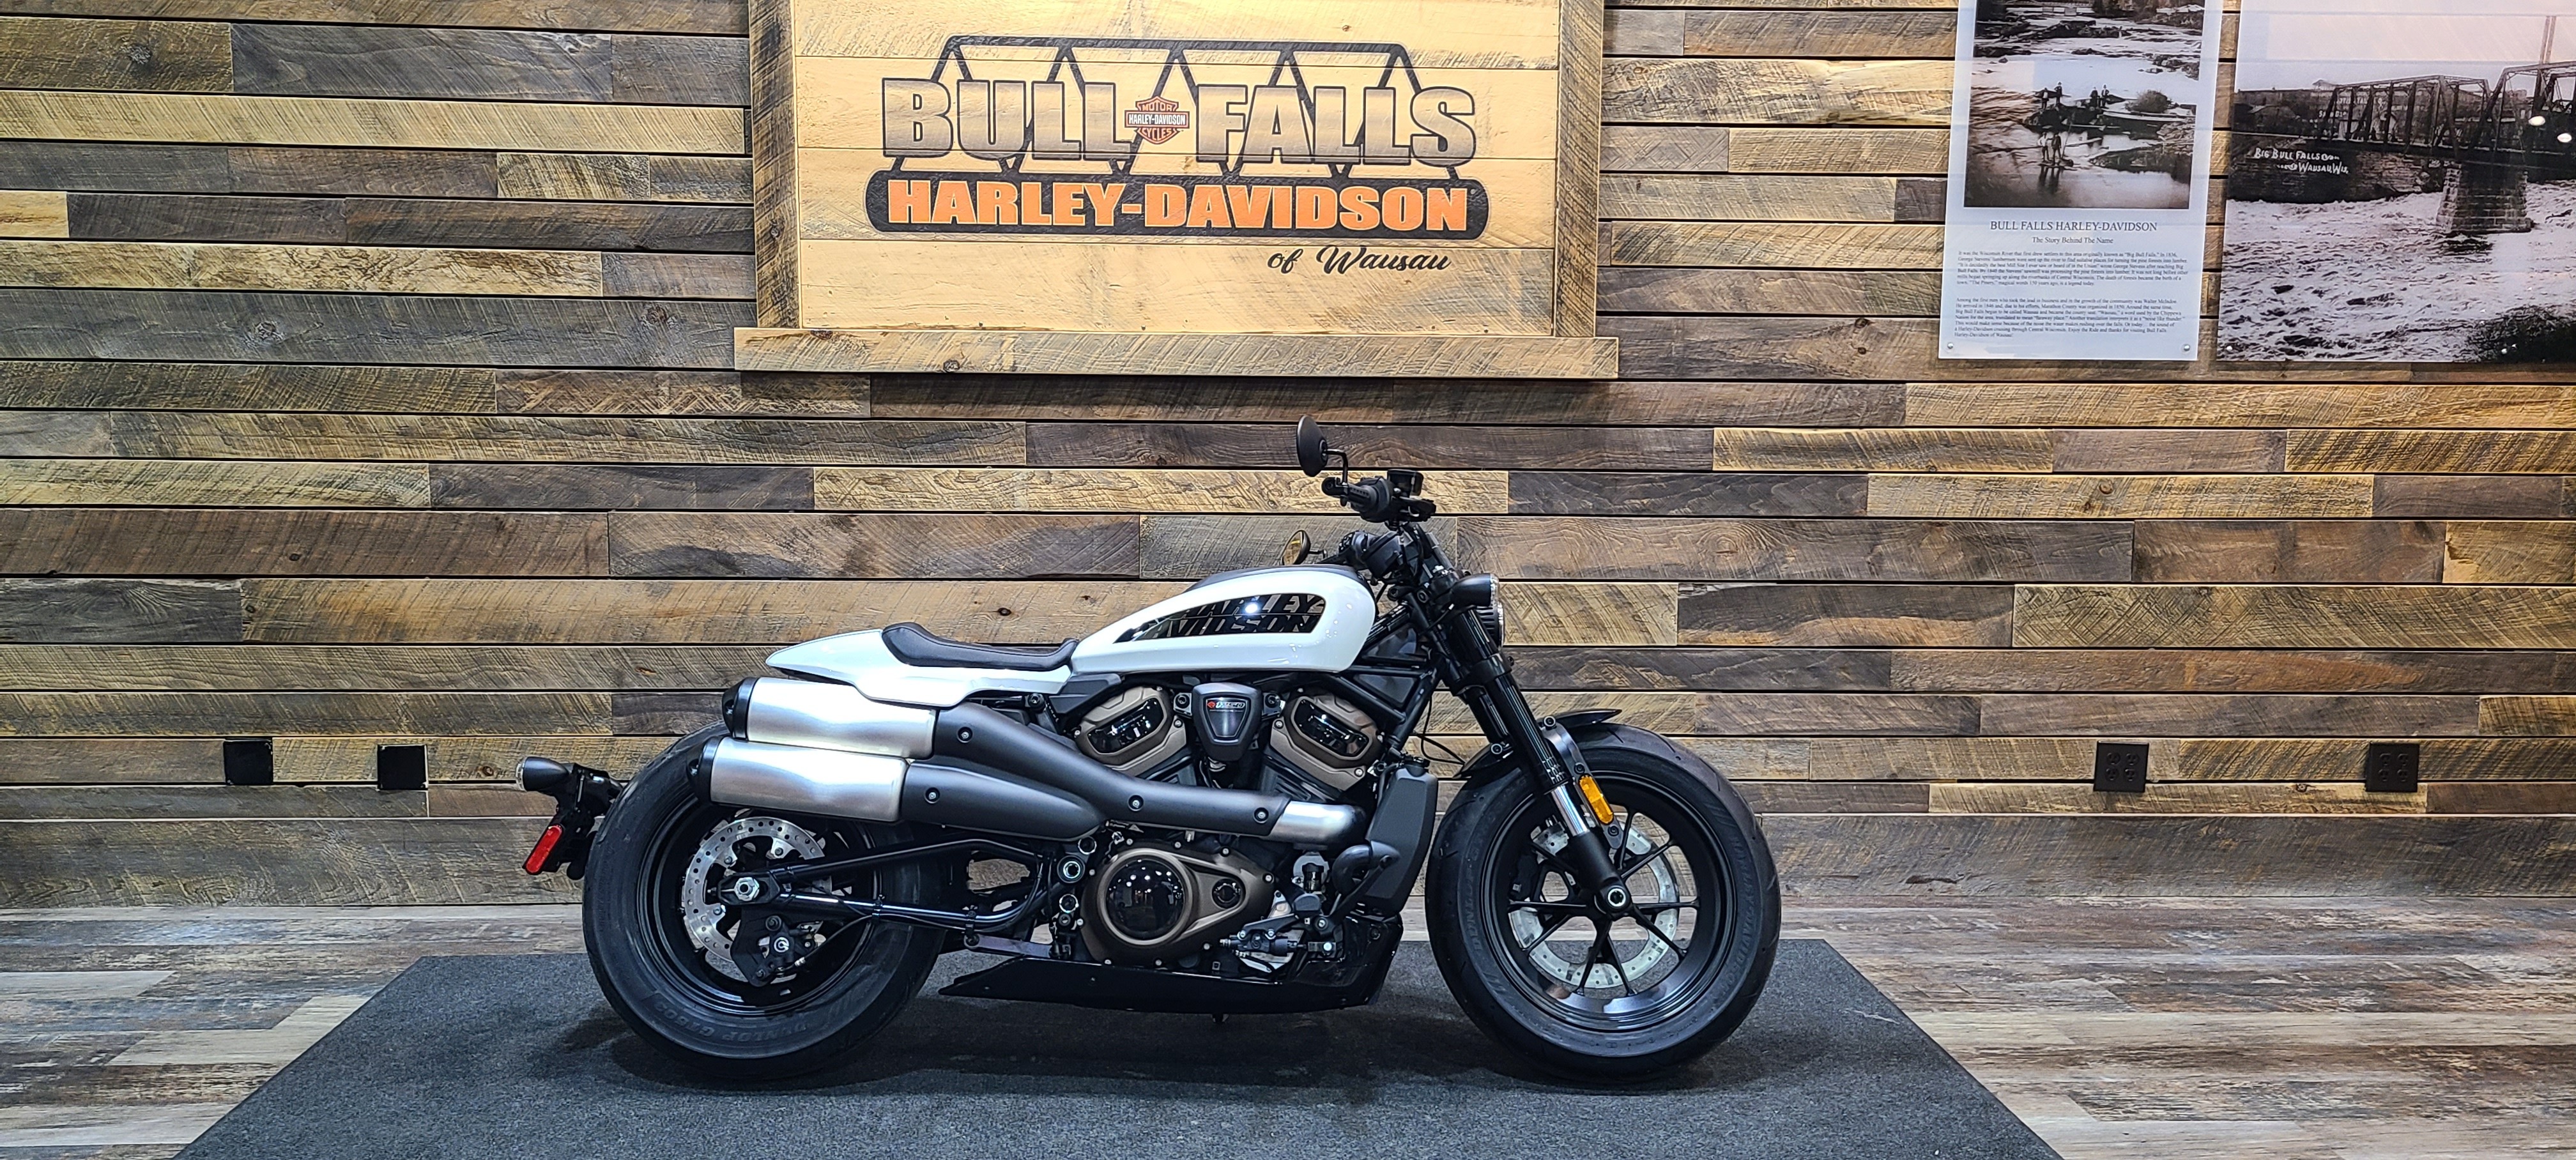 2021 Harley-Davidson Sportster S at Bull Falls Harley-Davidson